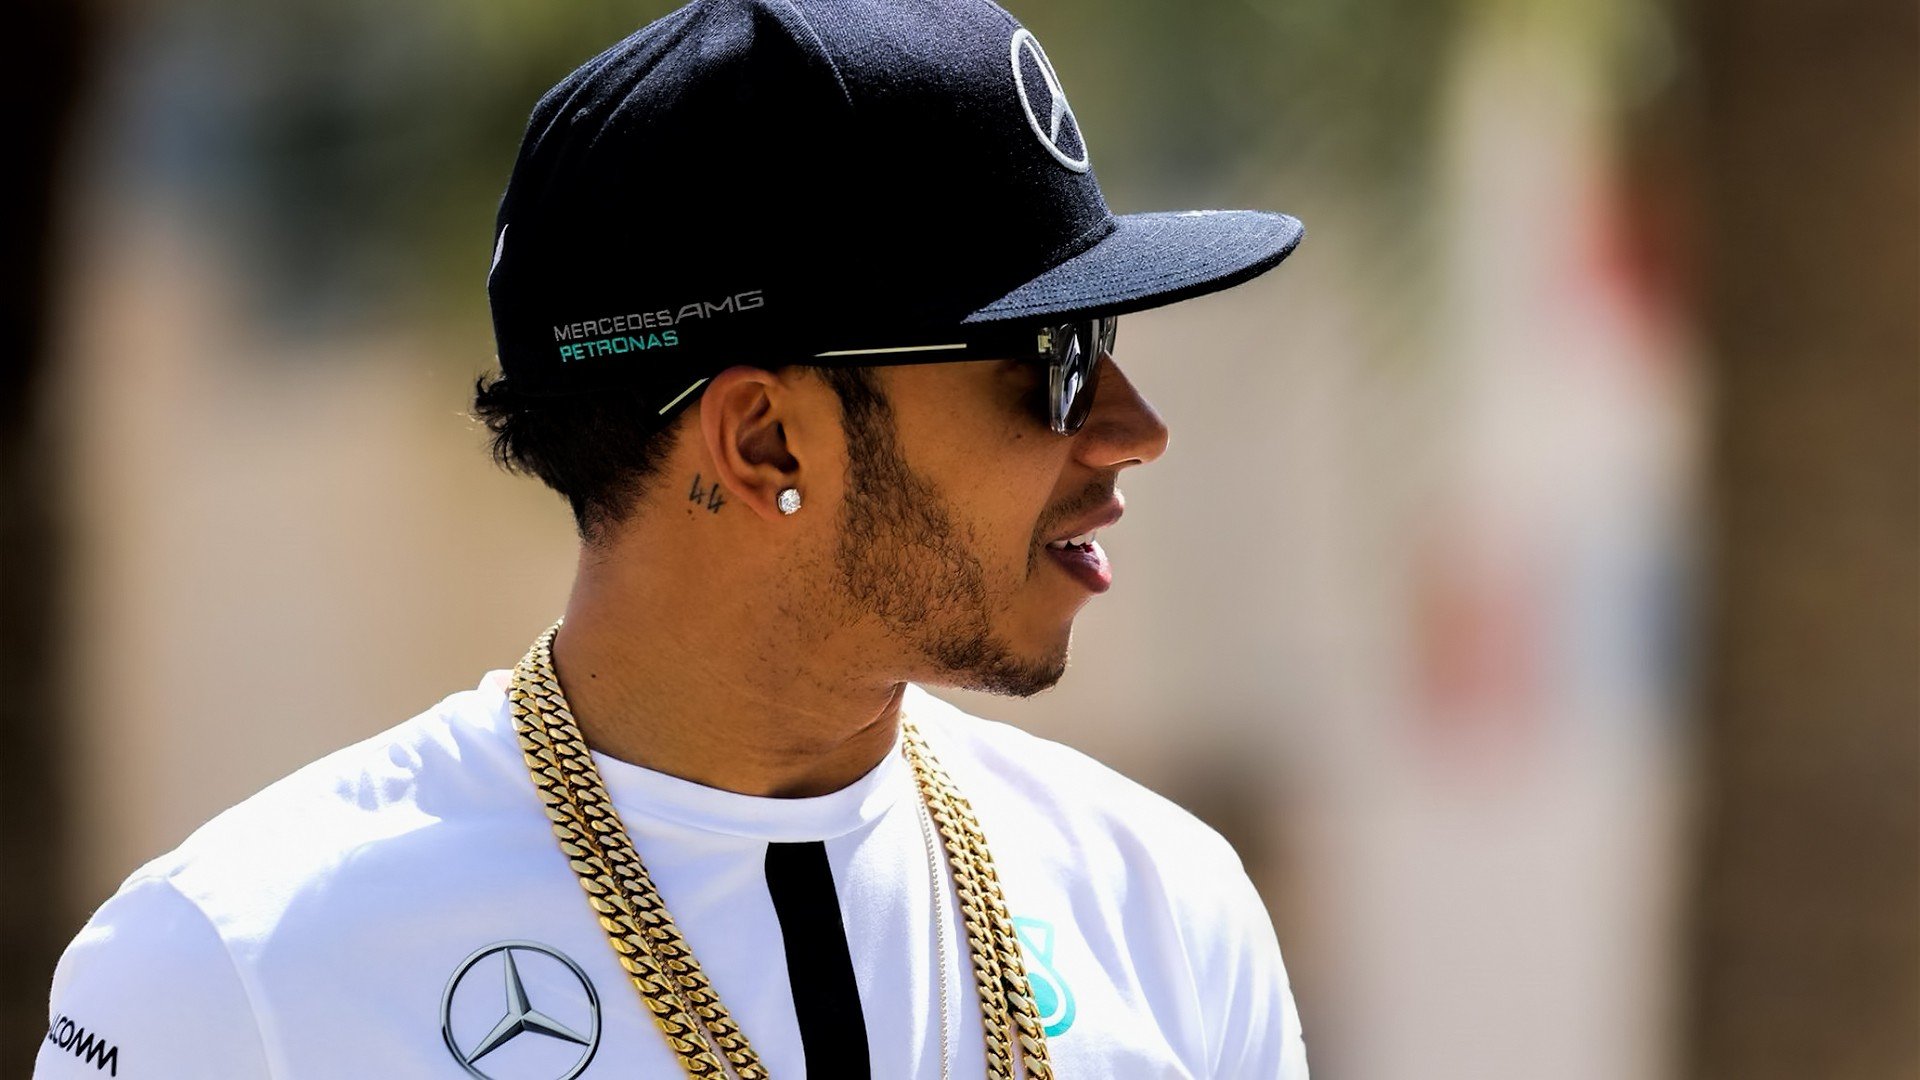 Lewis Hamilton Mercedes F1 Hd Wallpapers Desktop And Mobile Images Photos